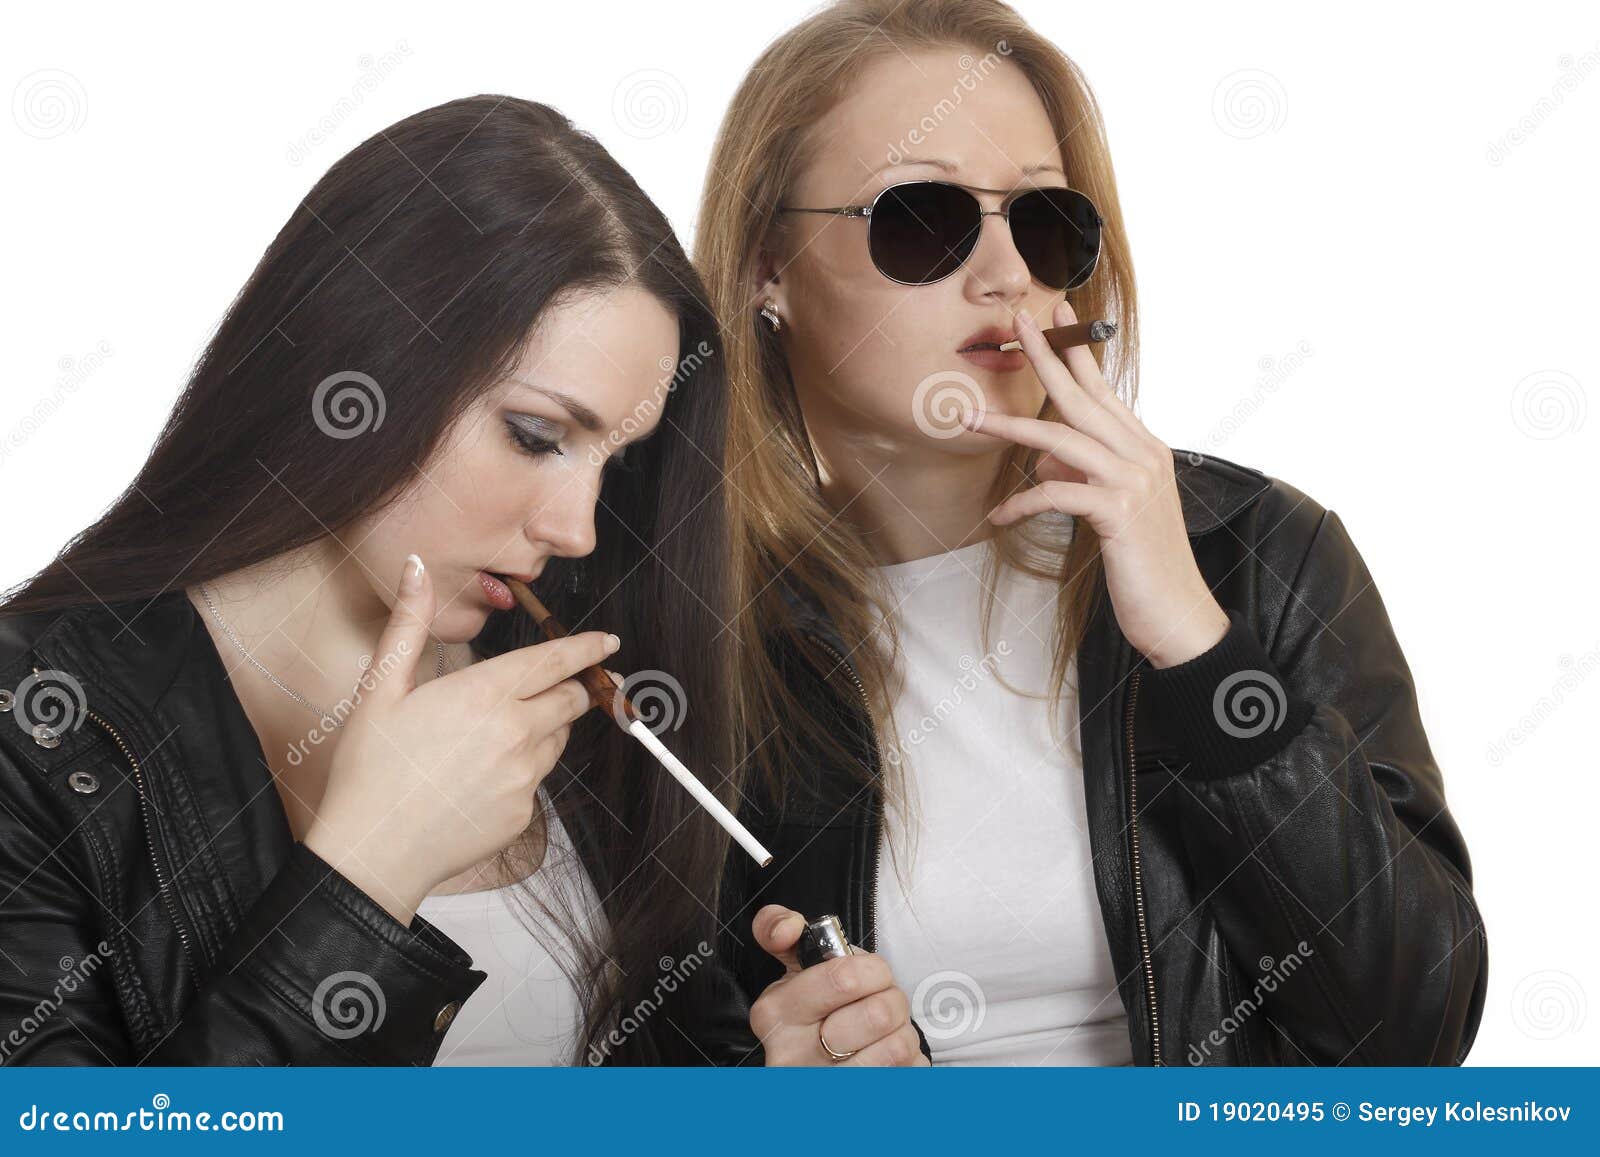 Two girls smoking stock image. Image of sunglasses, brunette ...